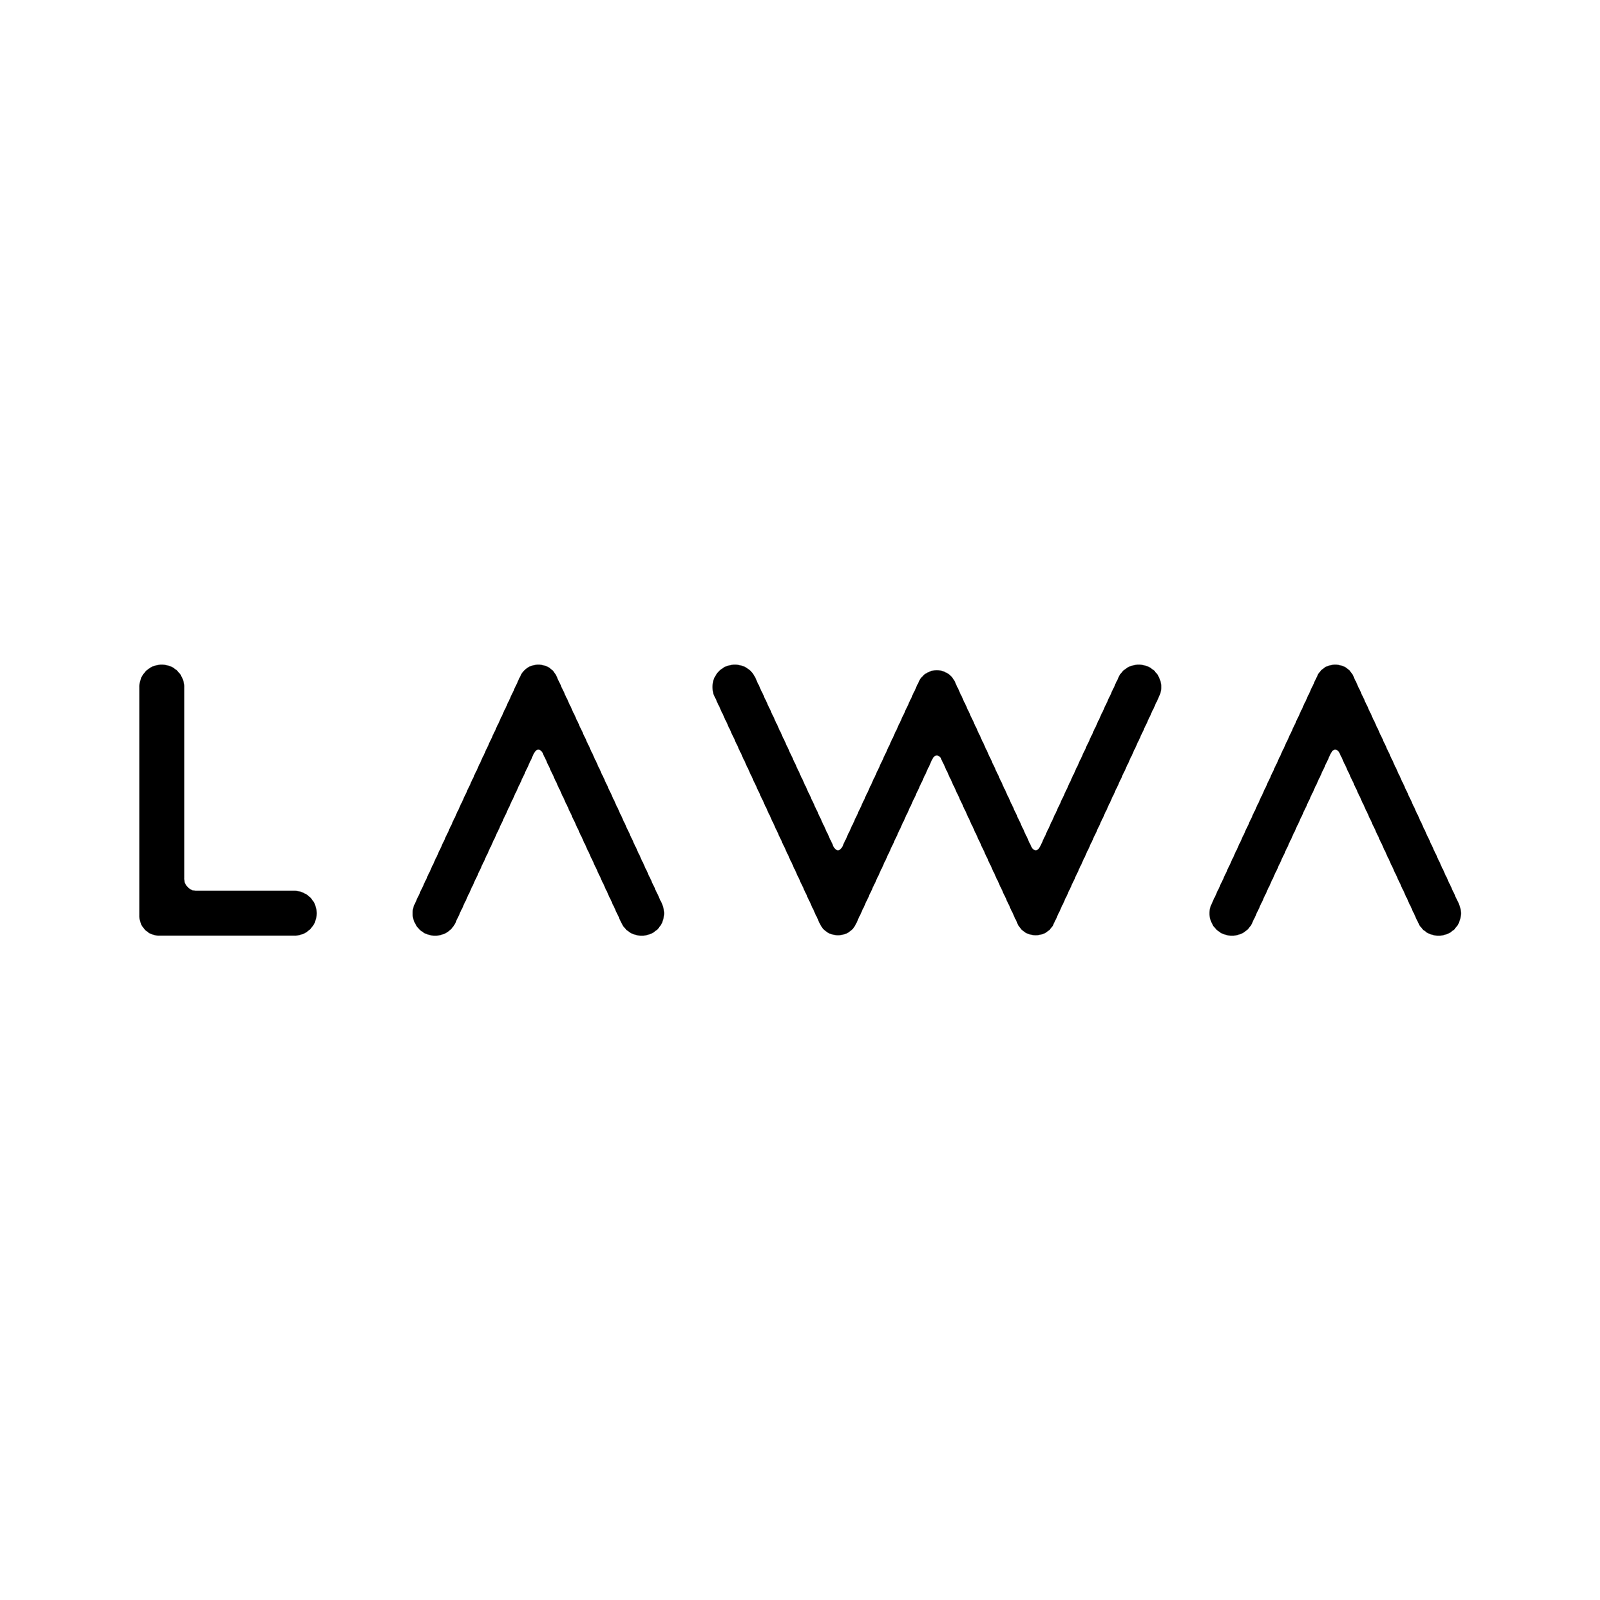 Lawa design - lawadesign - logo